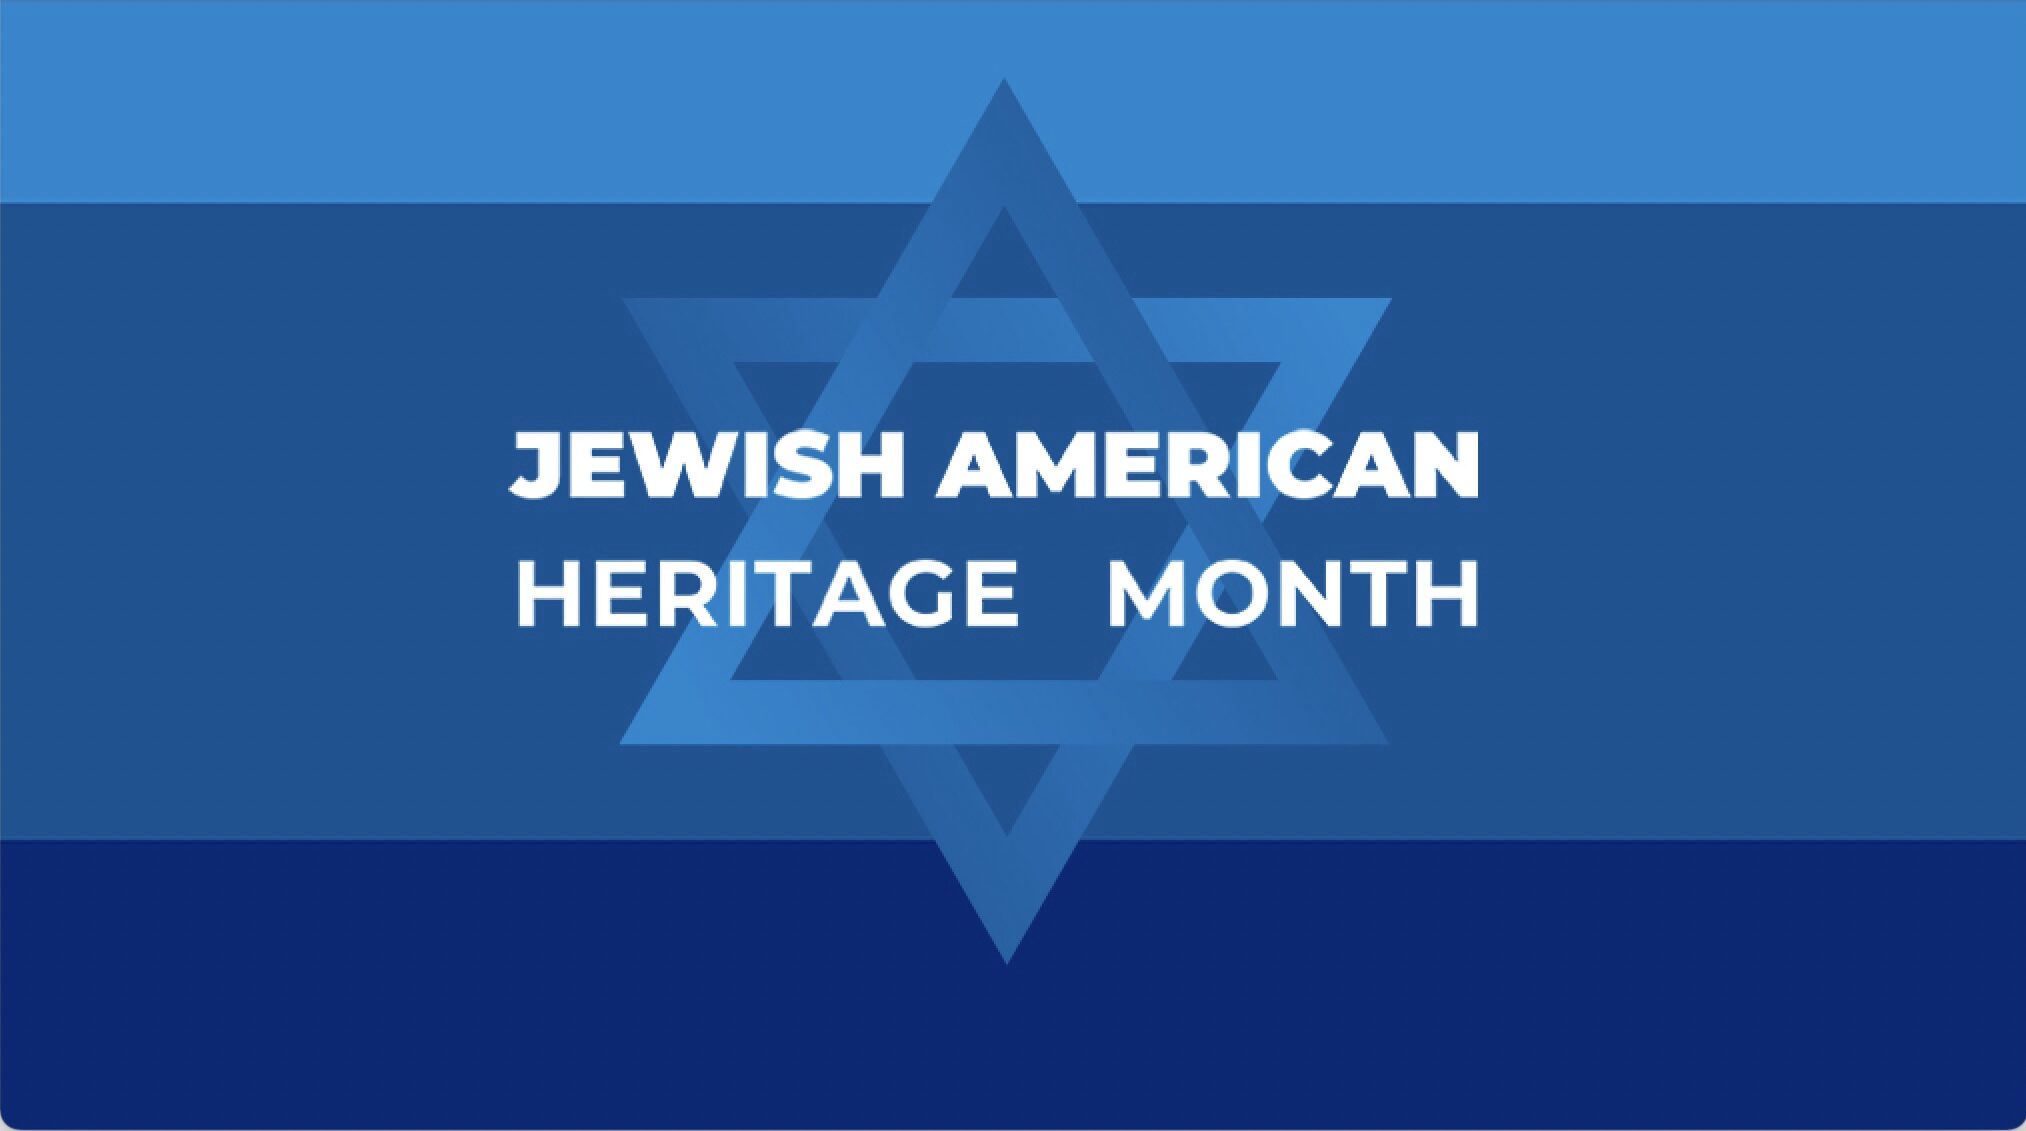 APS: W-L Celebrates our Jewish American Community